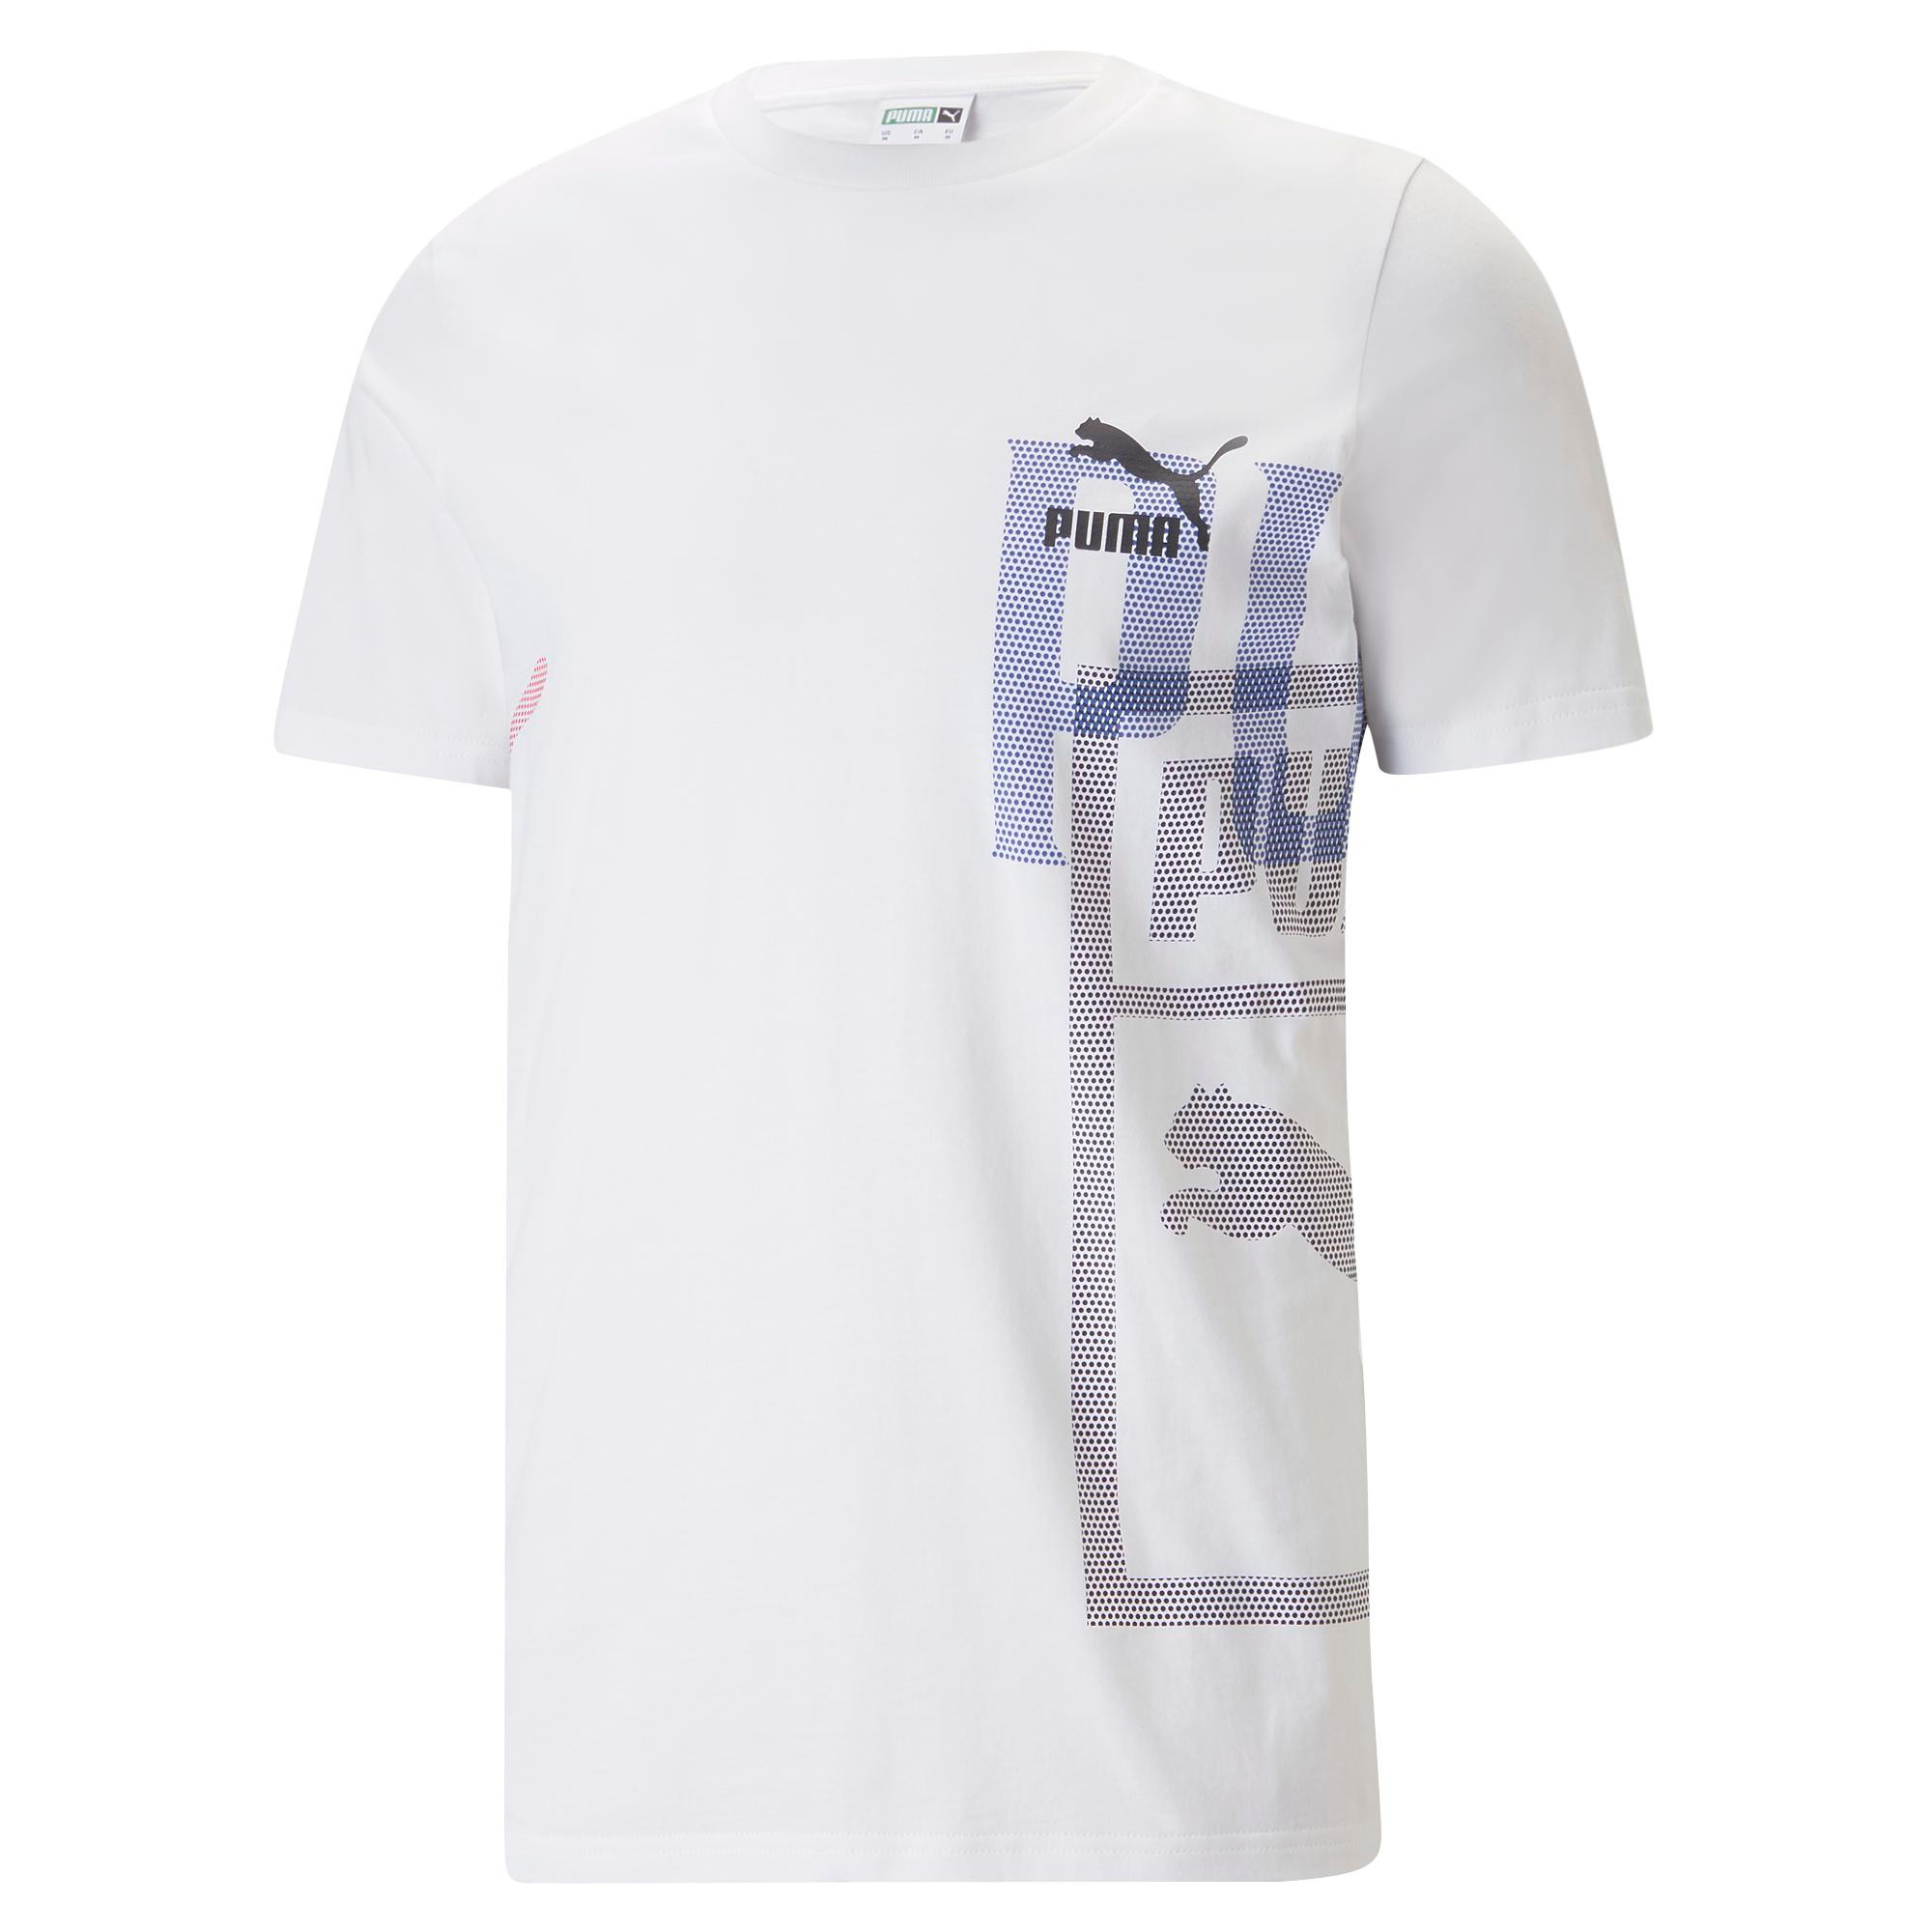 Puma - Cotton T-shirt with logo, White, large image number 0